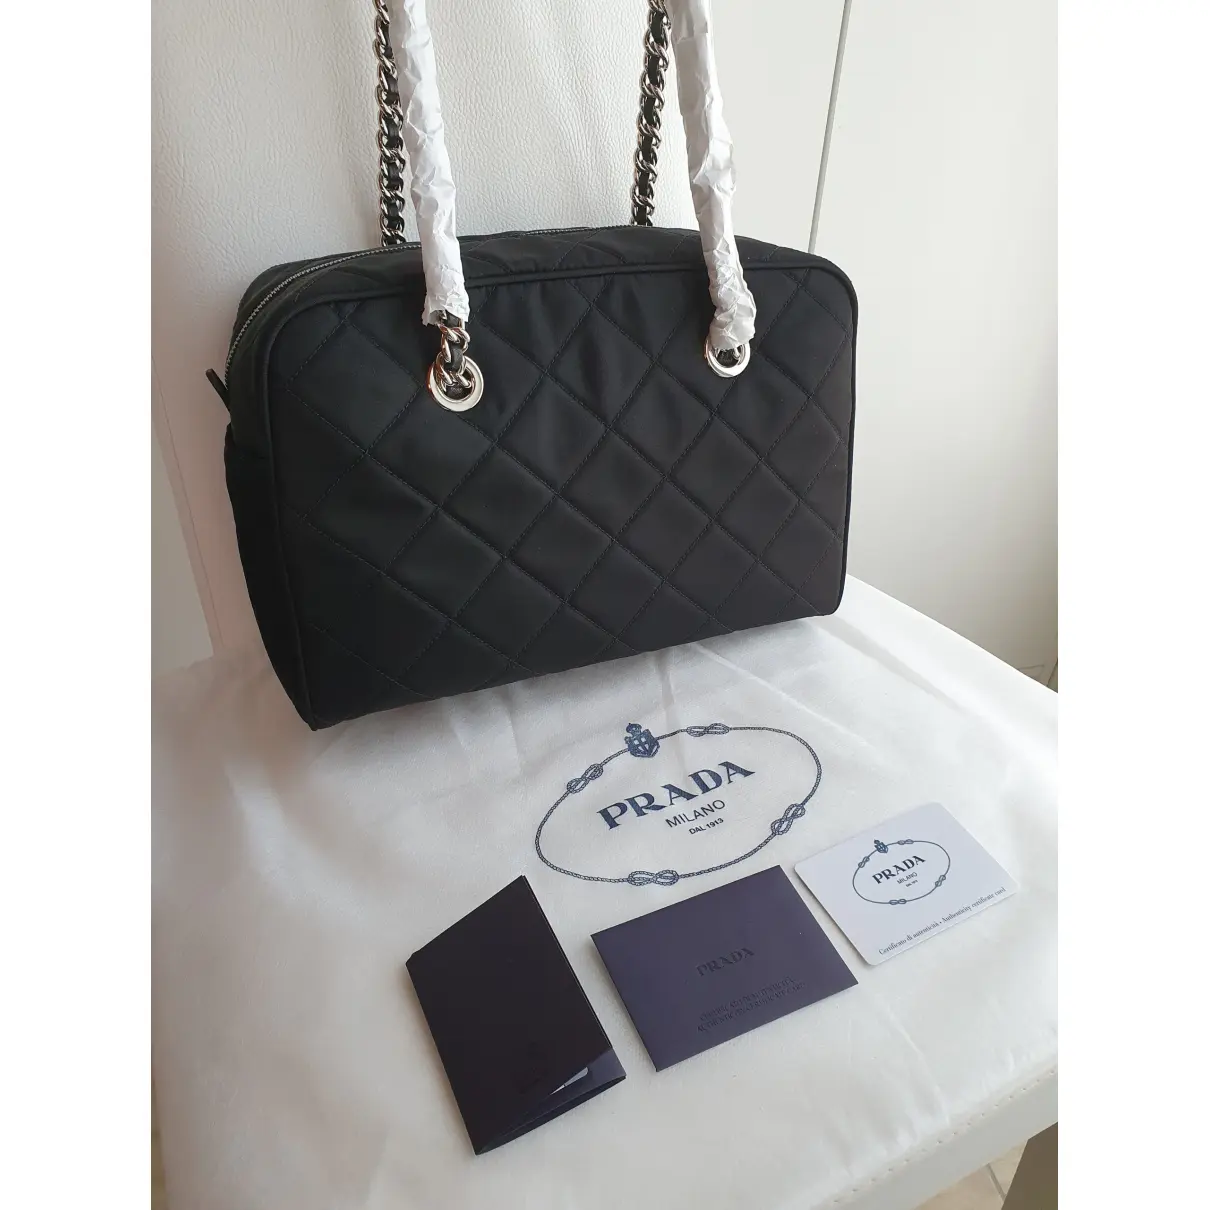 Buy Prada Tessuto Metallo  cloth handbag online